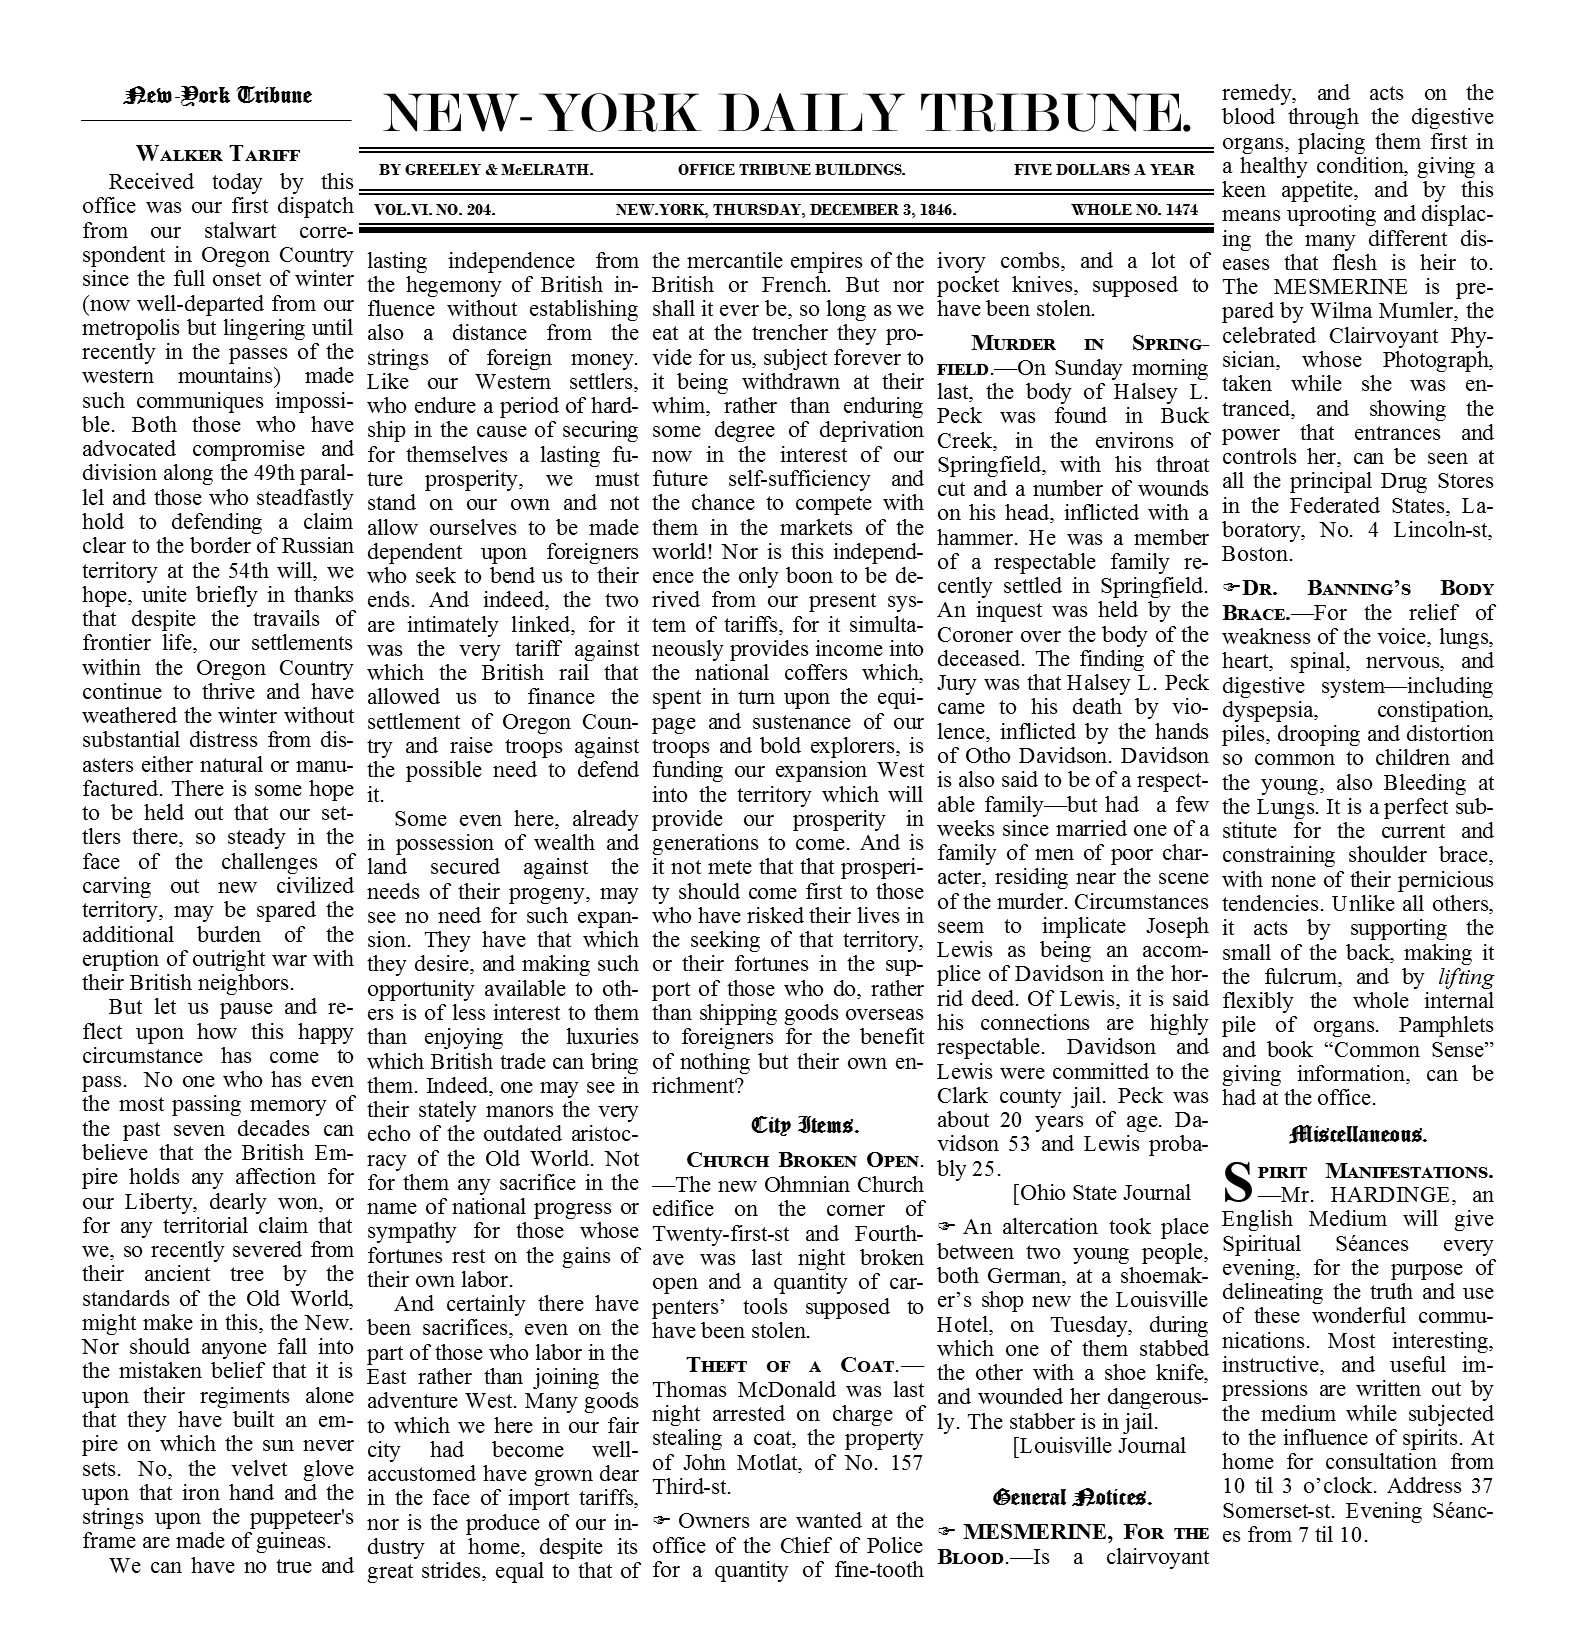 New York Daily Tribune Dec 3 1846